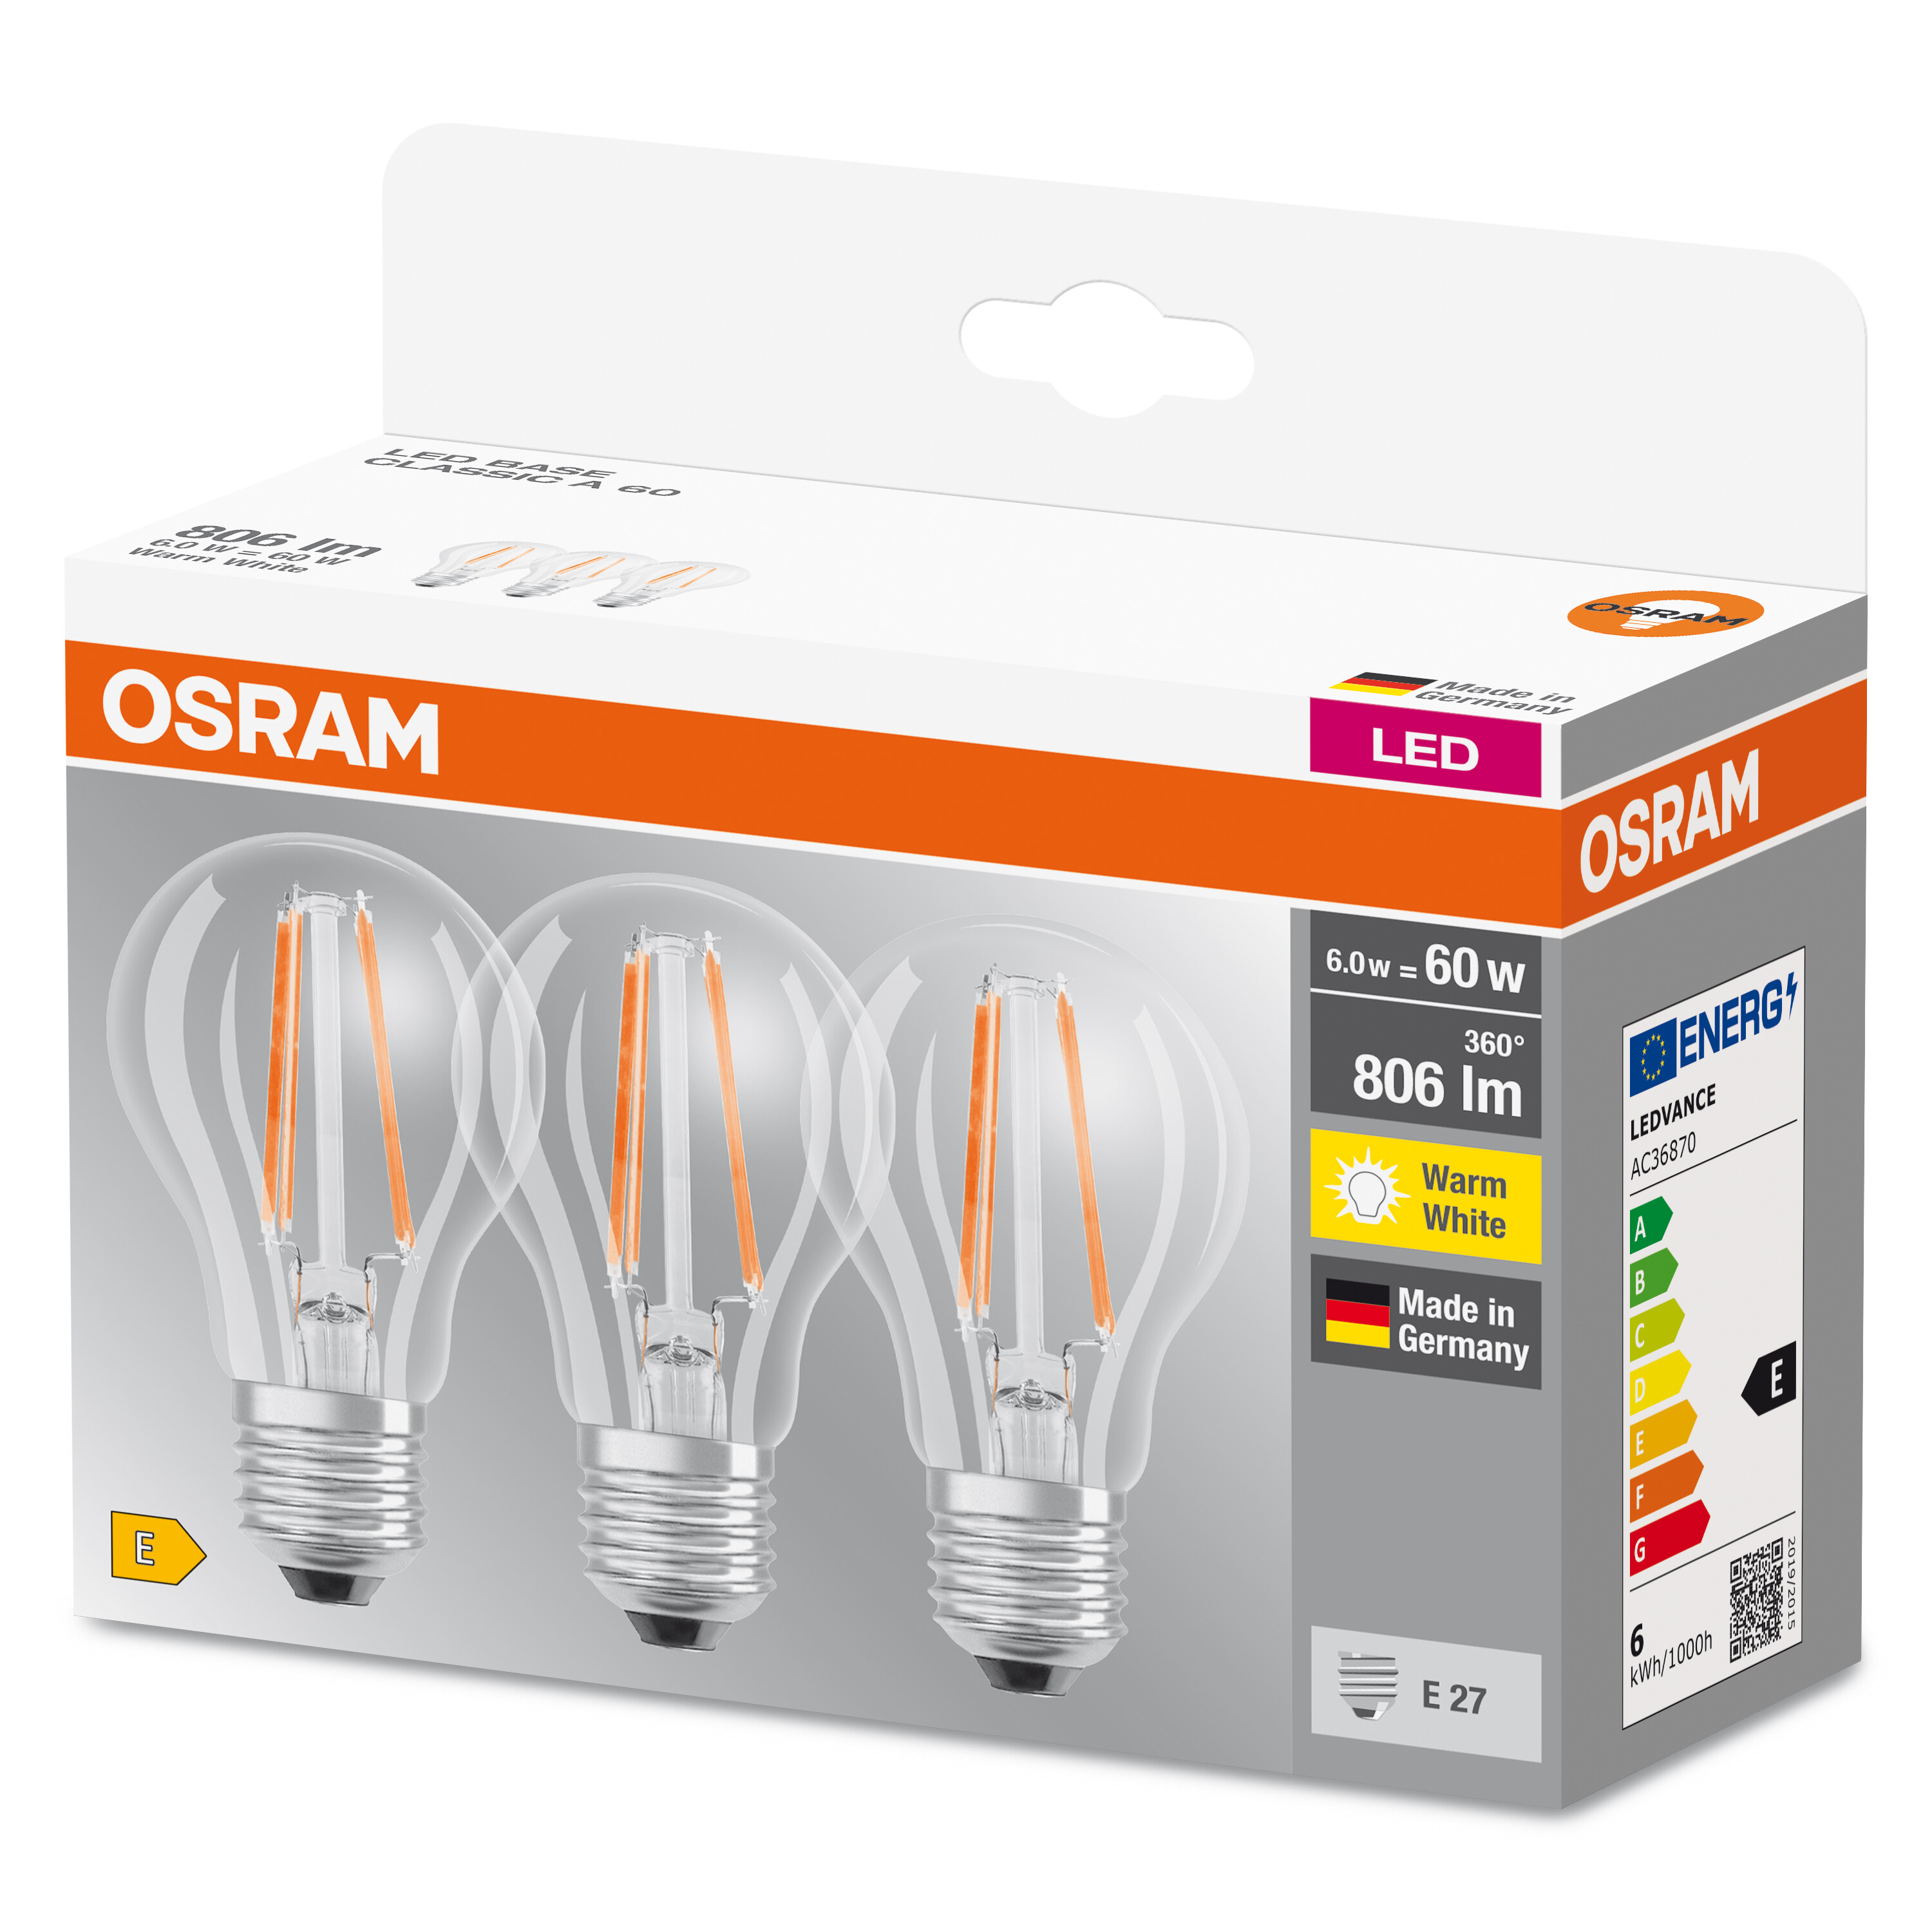 A LED Warmweiß OSRAM  LED 806 BASE Lampe Lumen CLASSIC